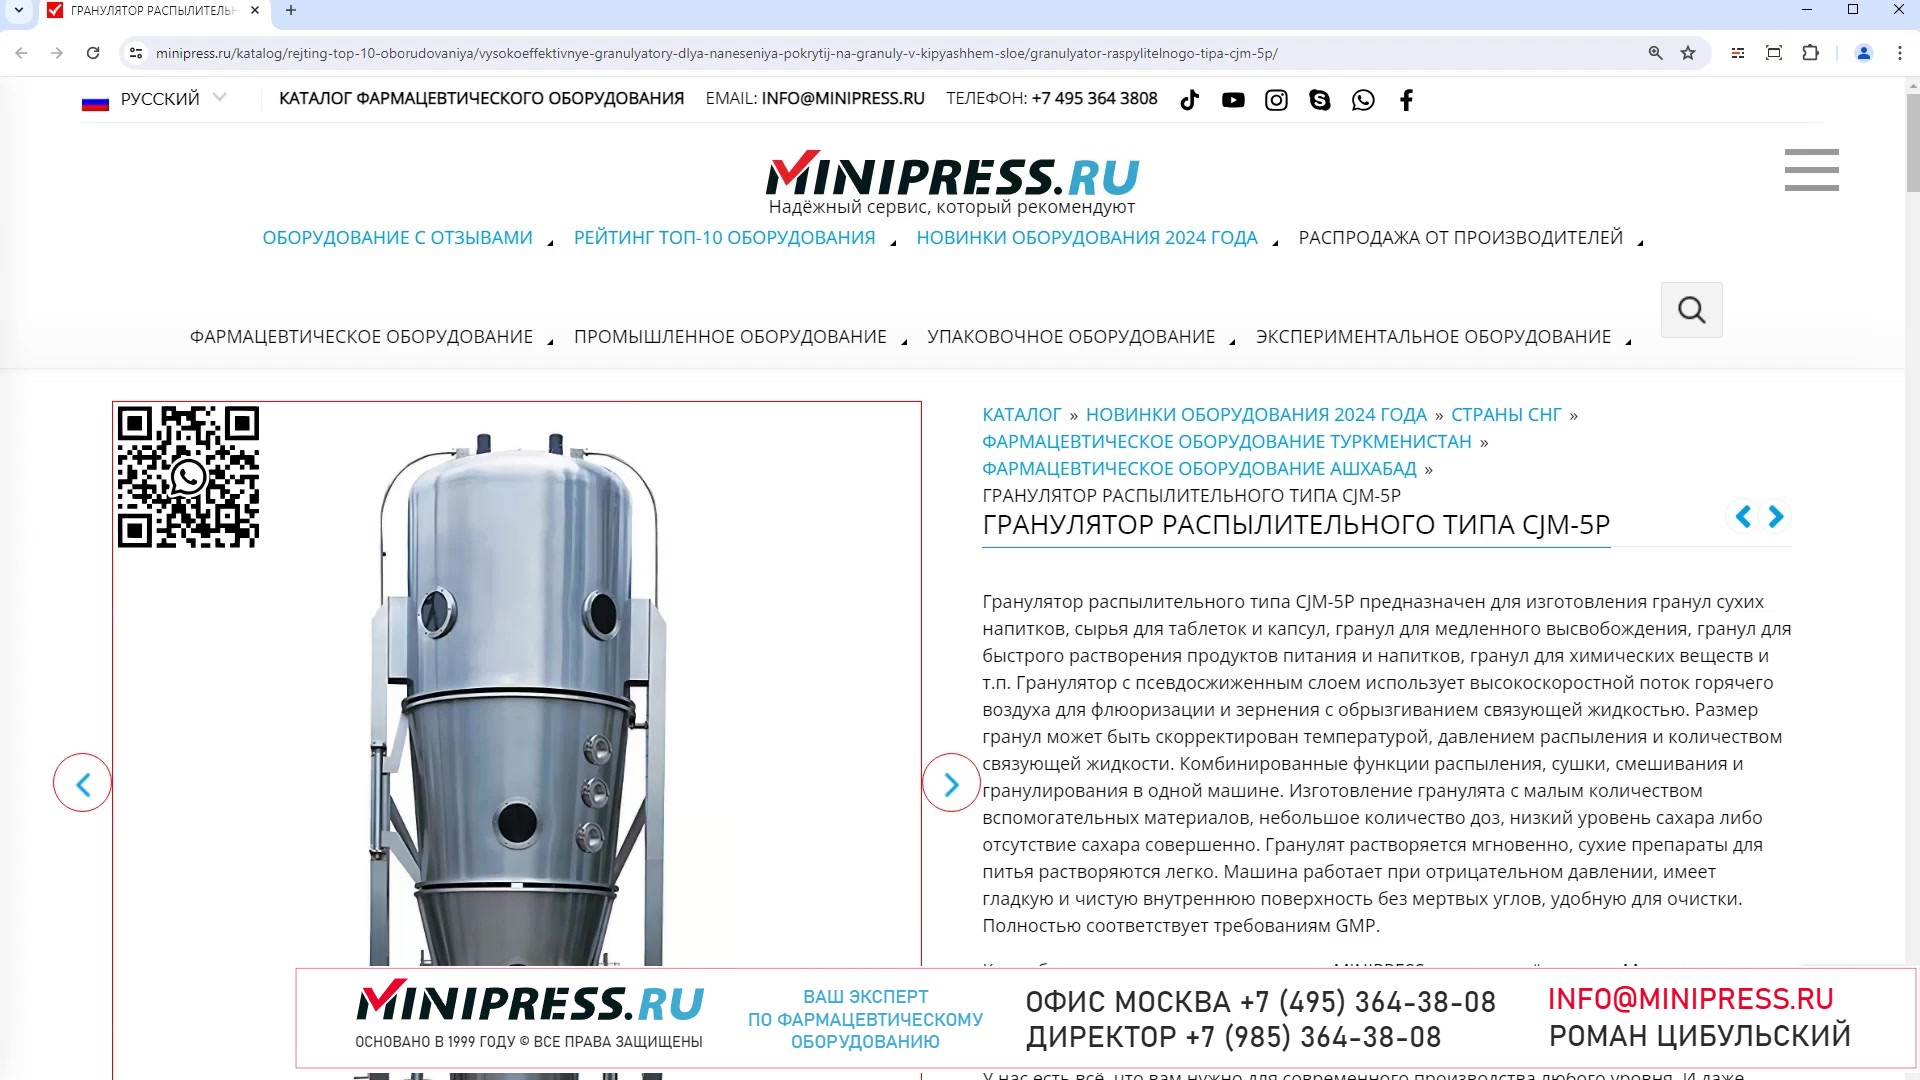 Minipress.ru Гранулятор распылительного типа CJM-5P